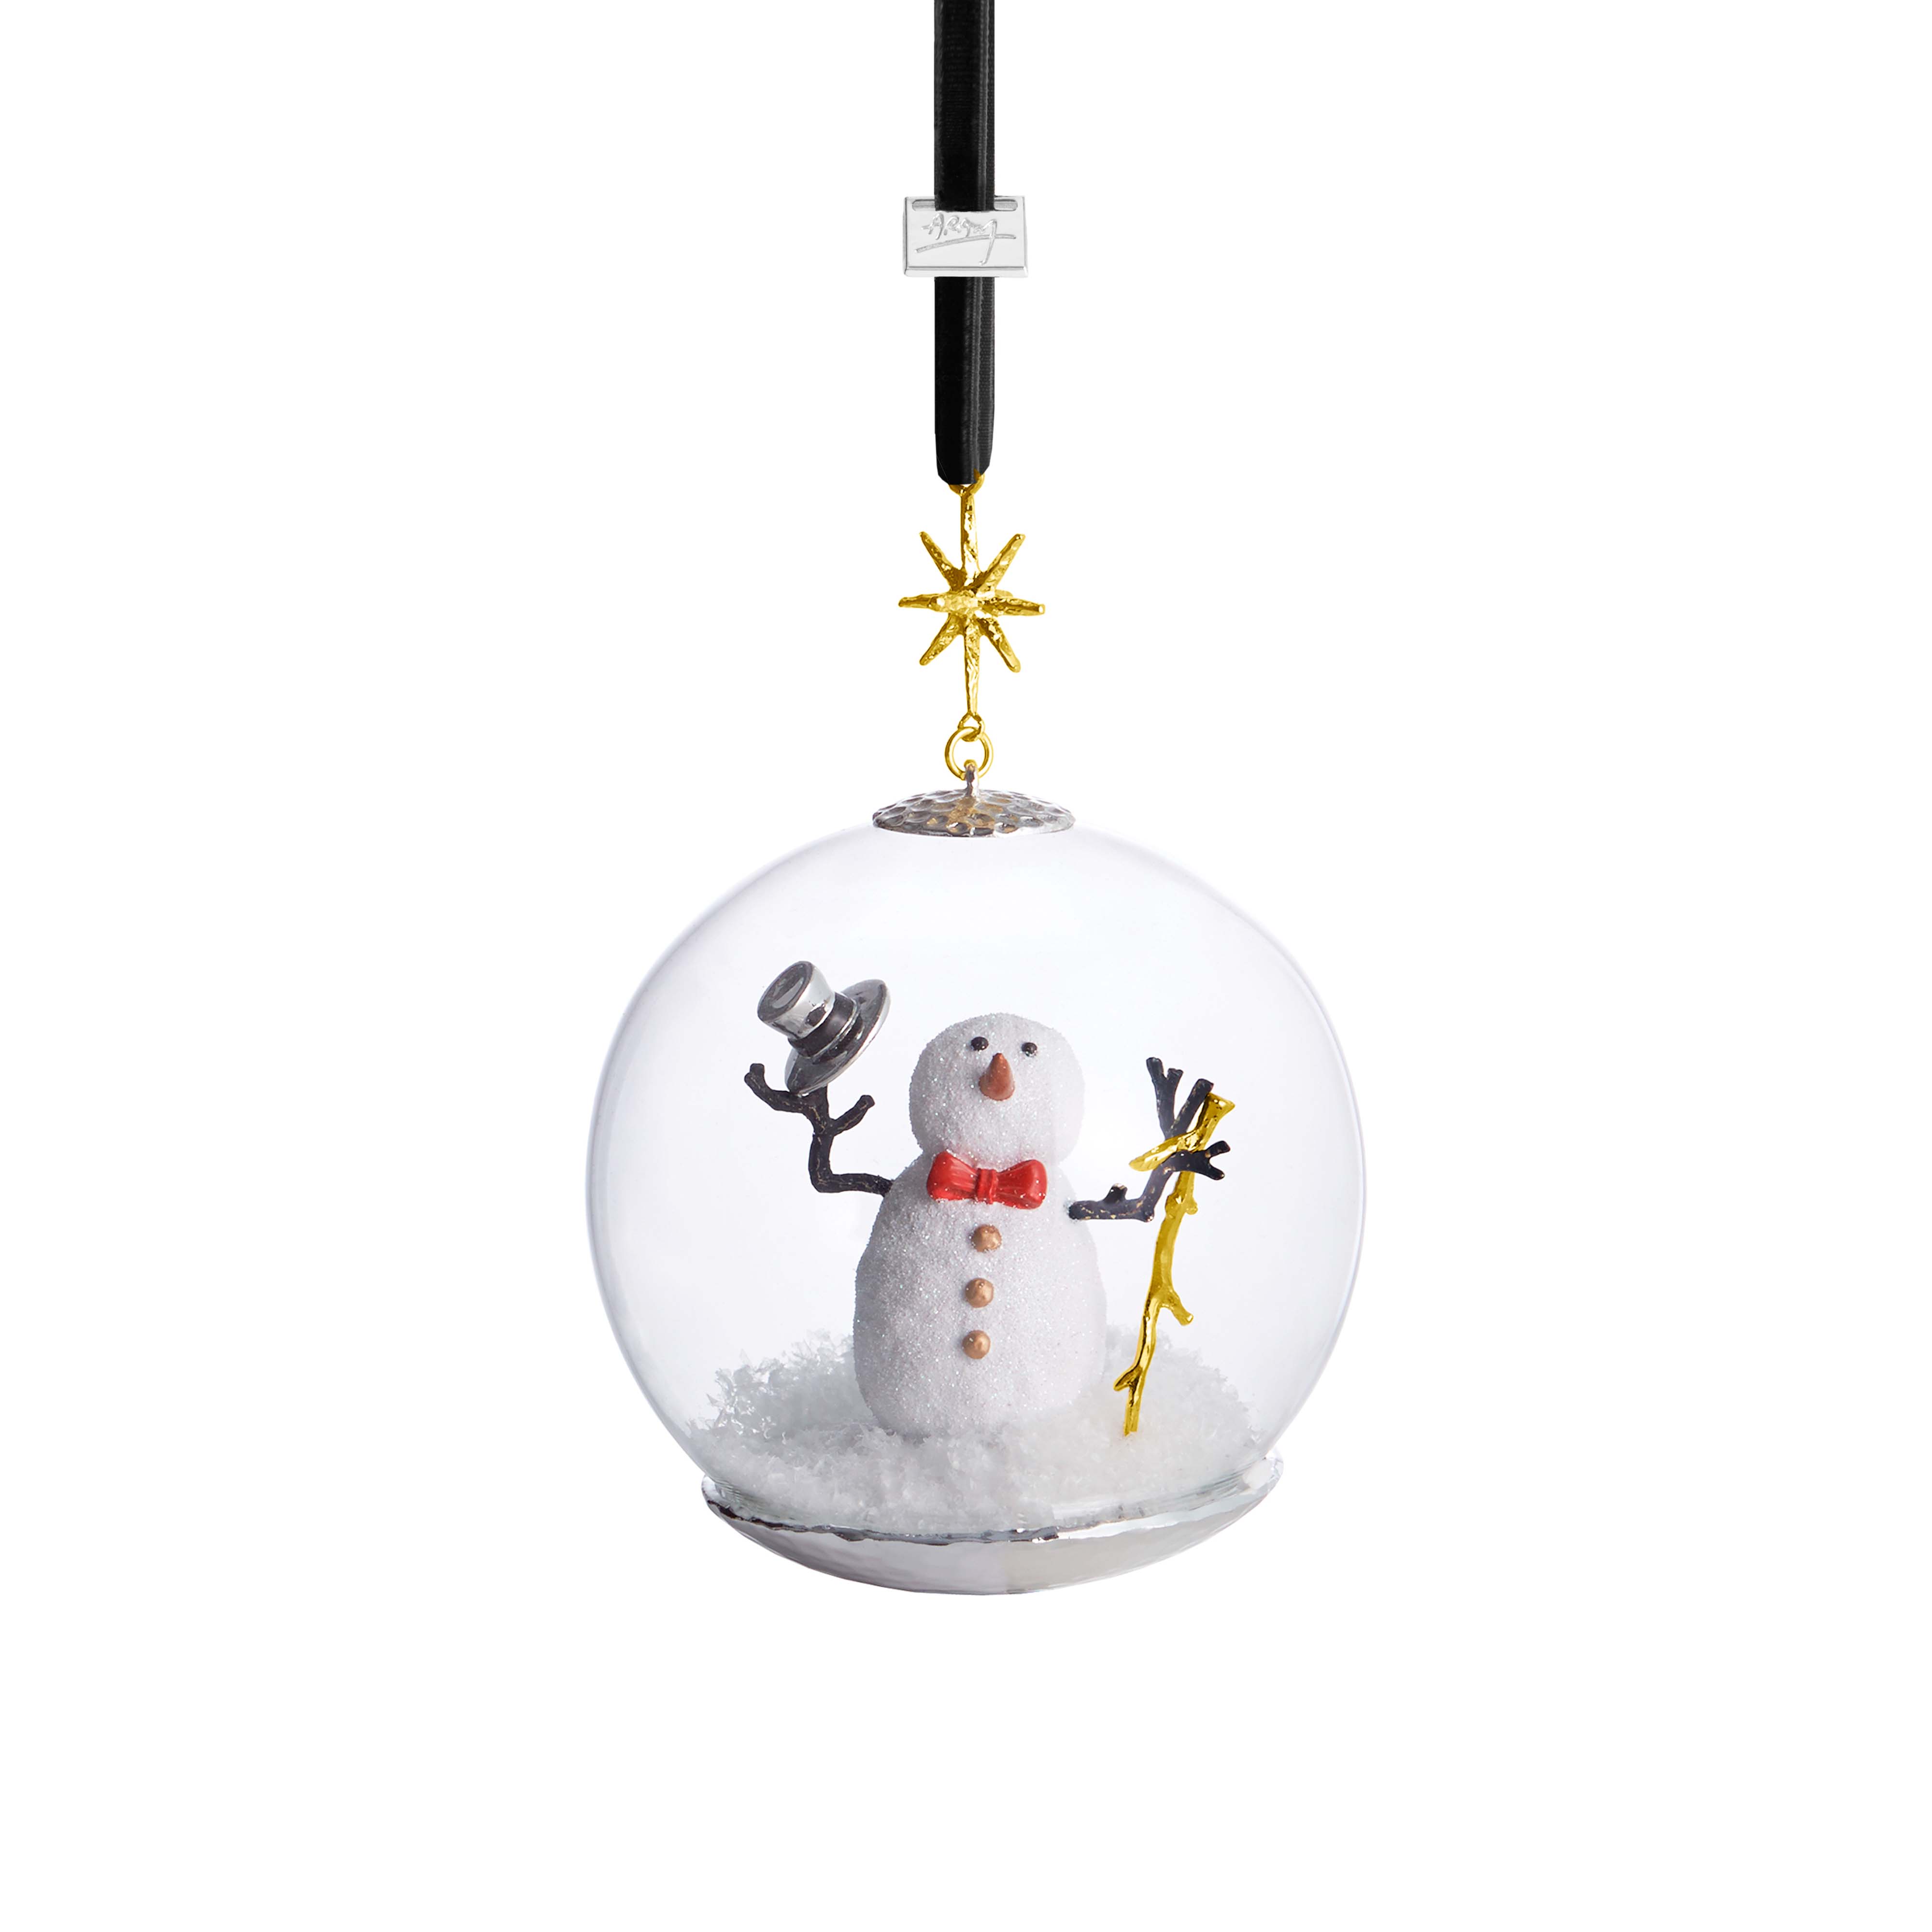 Michael Aram Snowman Snow Globe Ornament at STORIES By SWISSBO